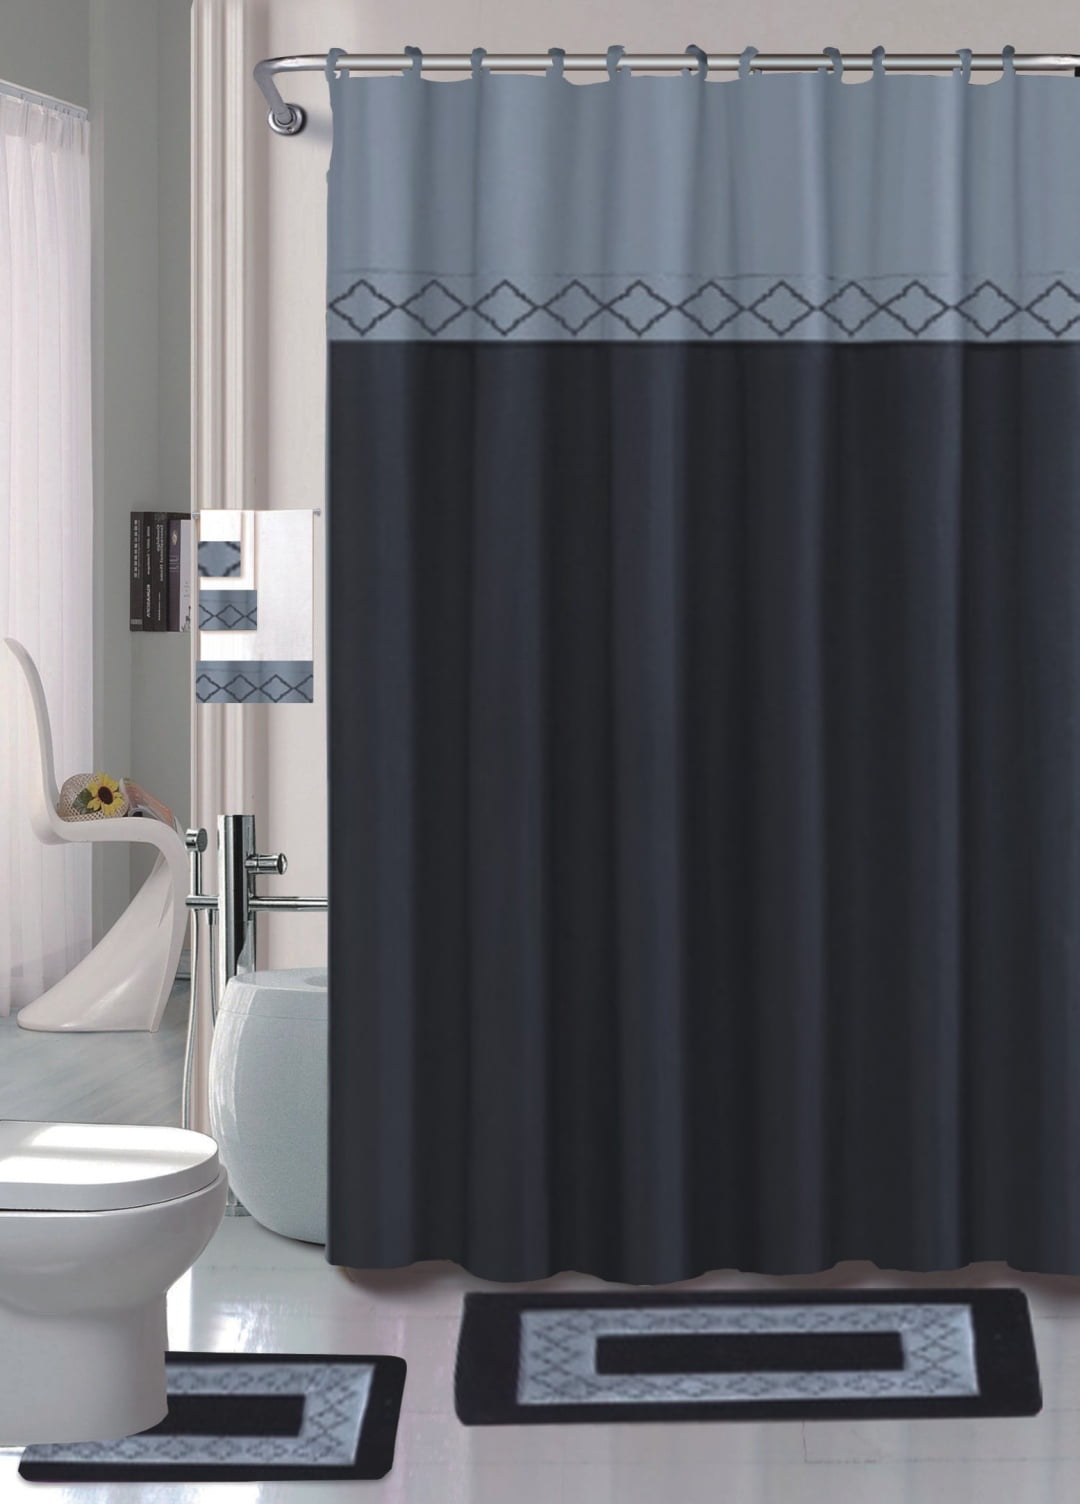 2 Non Slip Bath Mats Rugs Fabric Shower, 15 Piece Bathroom Set